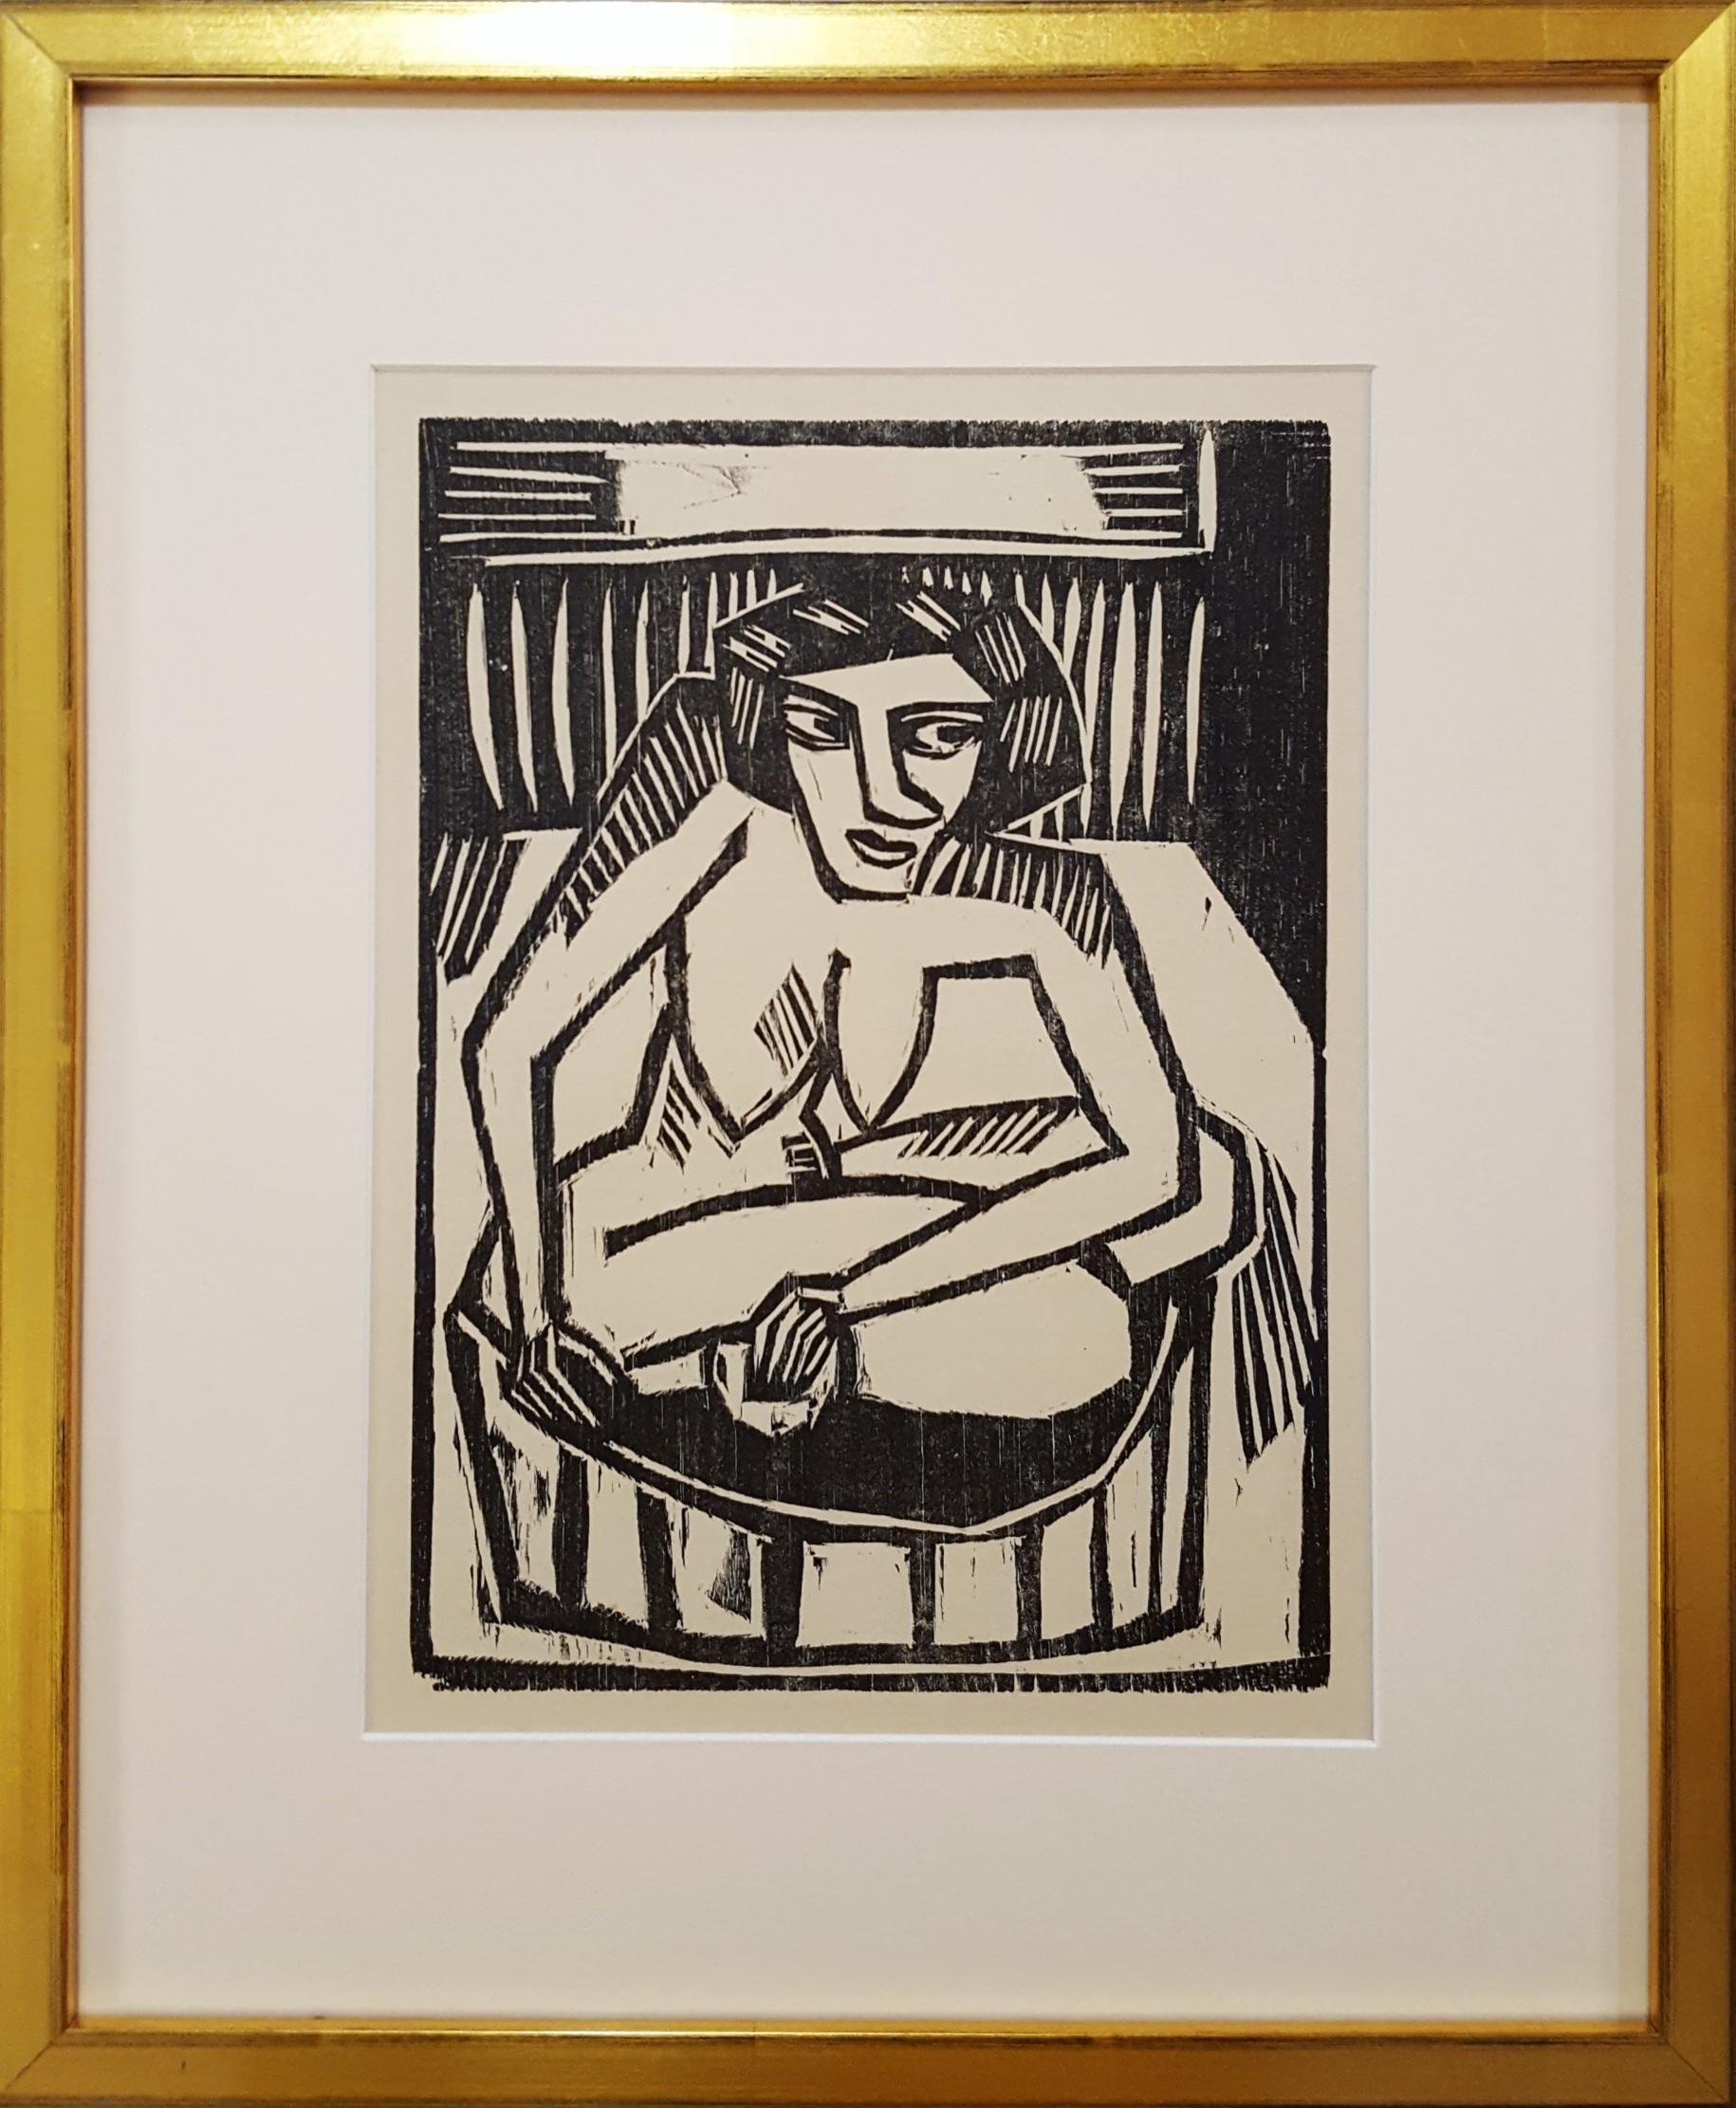 Frau in der Wanne (Woman in Tub) /// German Expressionism Schmidt-Rottluff Nude  - Print by Karl Schmidt-Rottluff